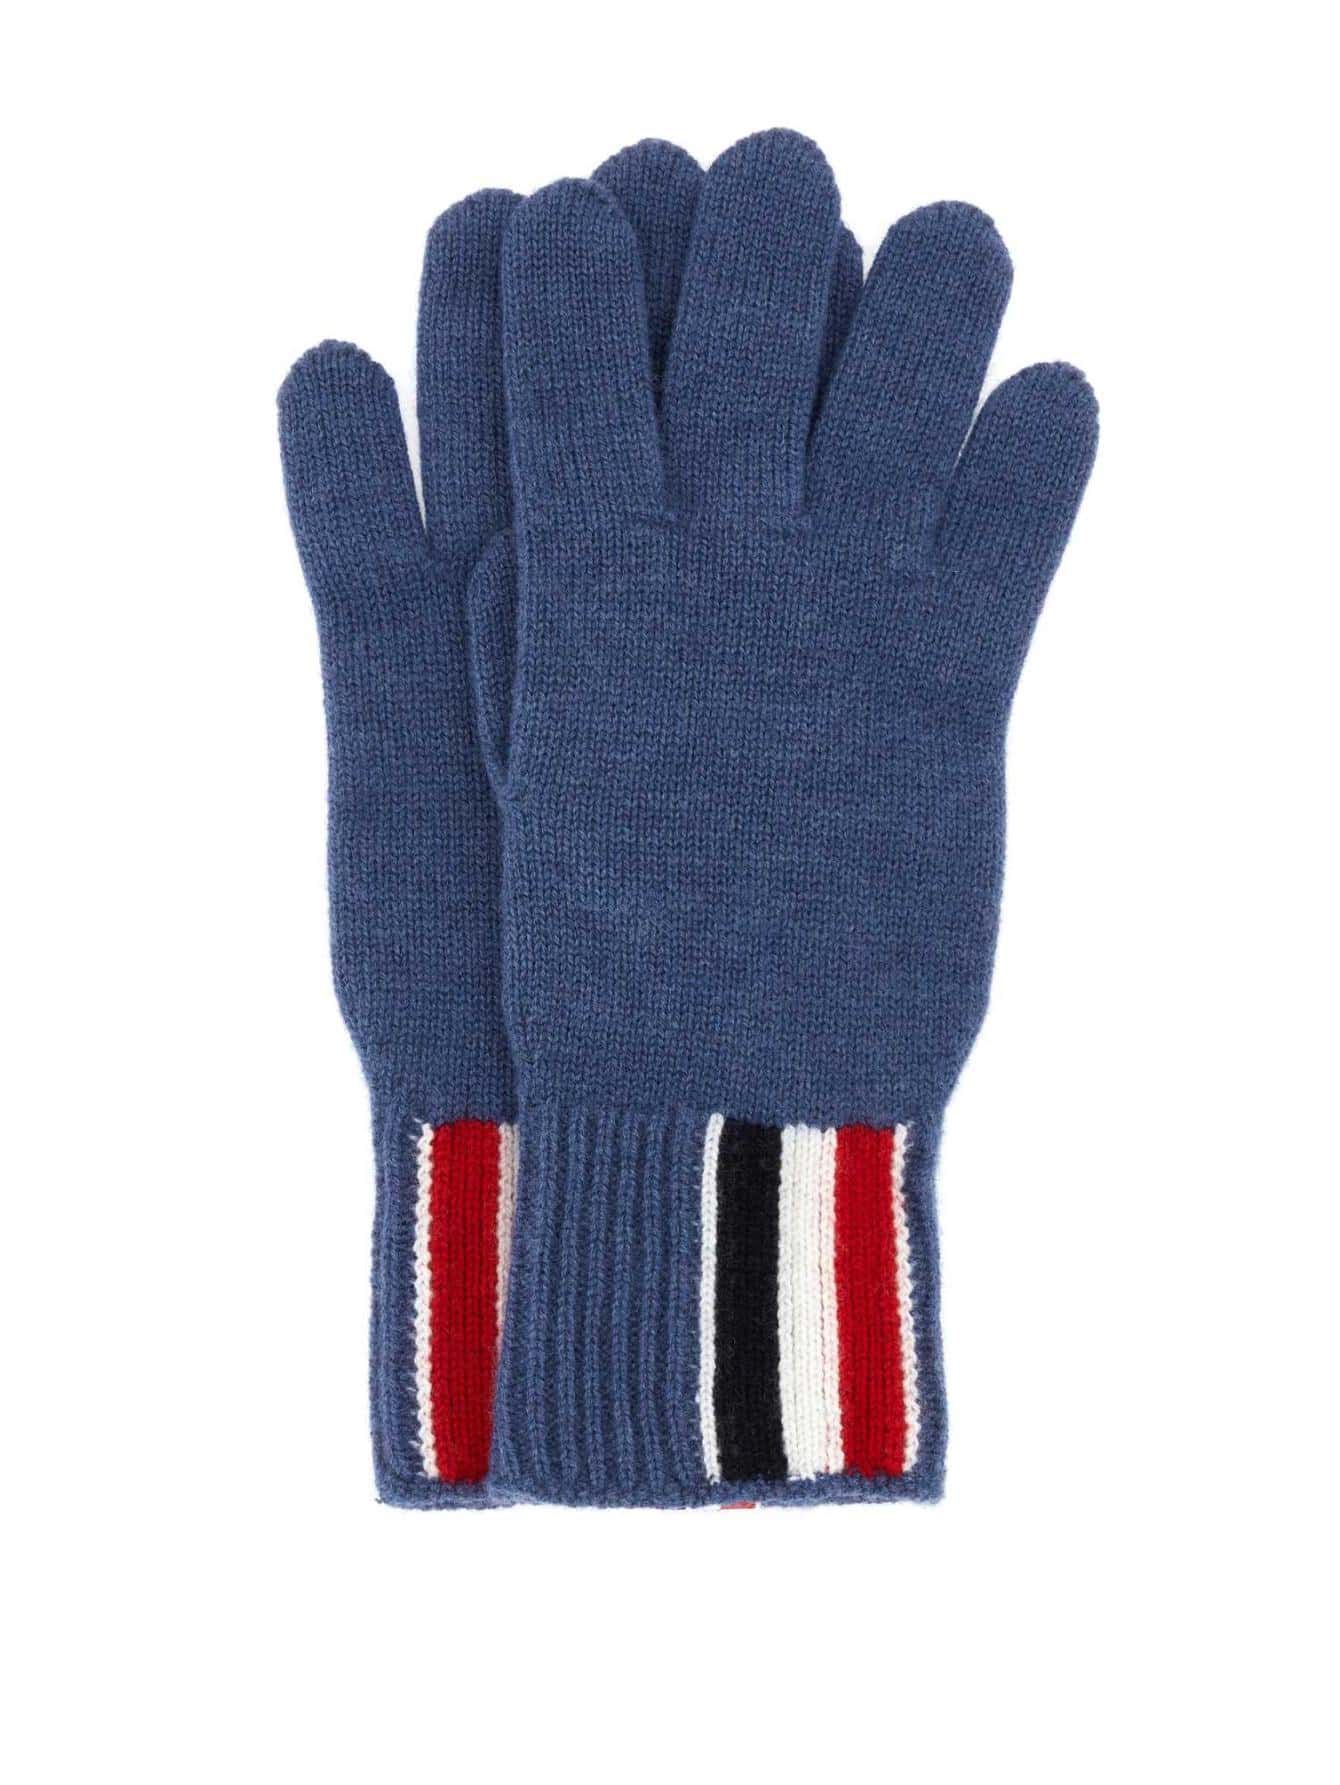 Мужские перчатки Thom Browne BLUE MKG011AY1018435, синий мужские шапки thom browne decor mhc337ff0171960 красный